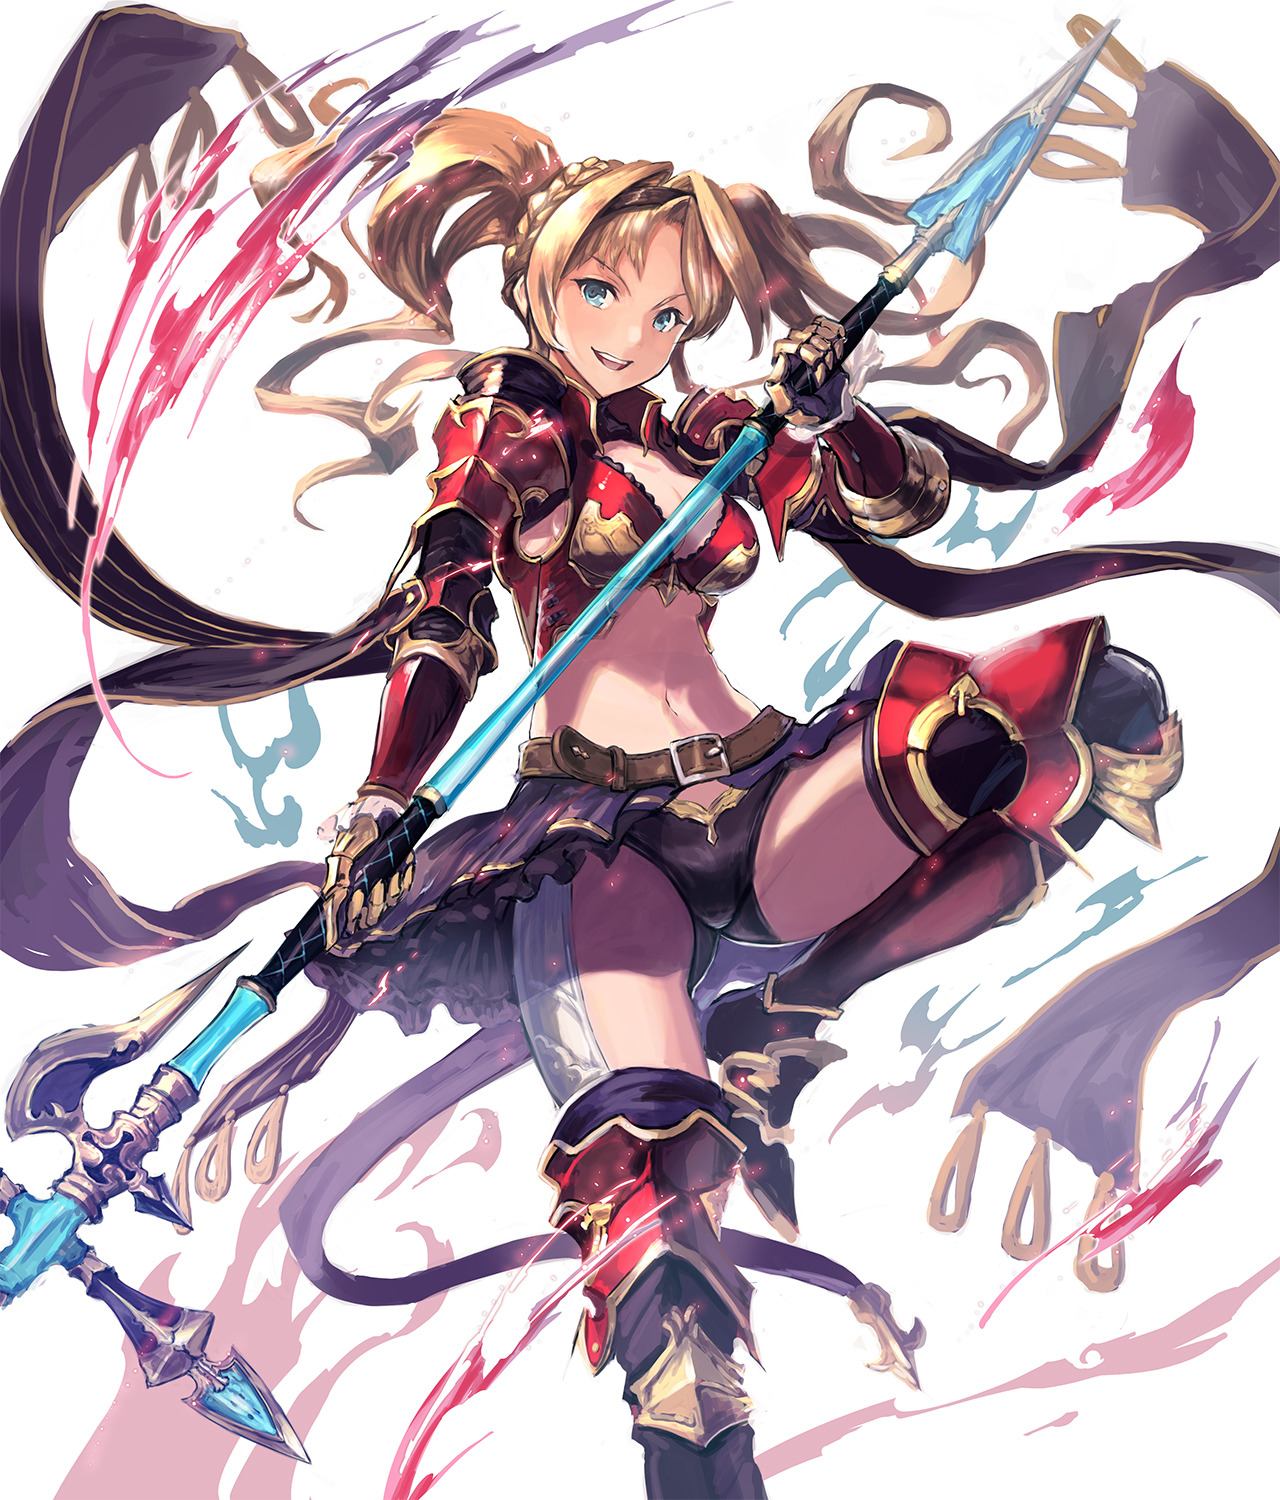 Warrior girl Zeta with lance: game character art: Granblue Fantasy (Artist: Aoi kamogawa)